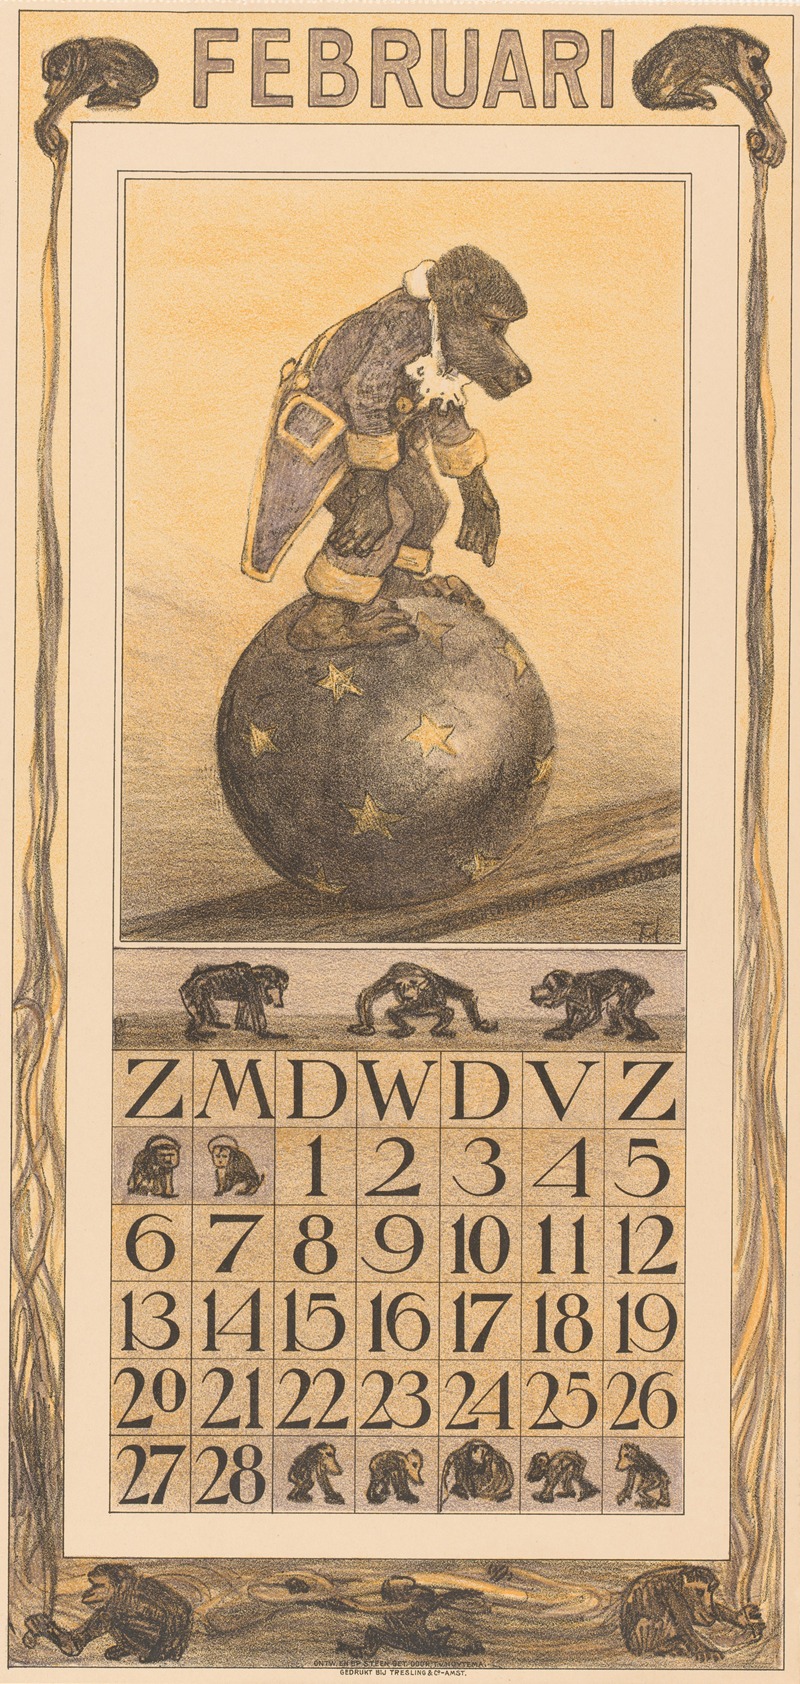 Theo van Hoytema - Kalenderblad februari met aap op een bal